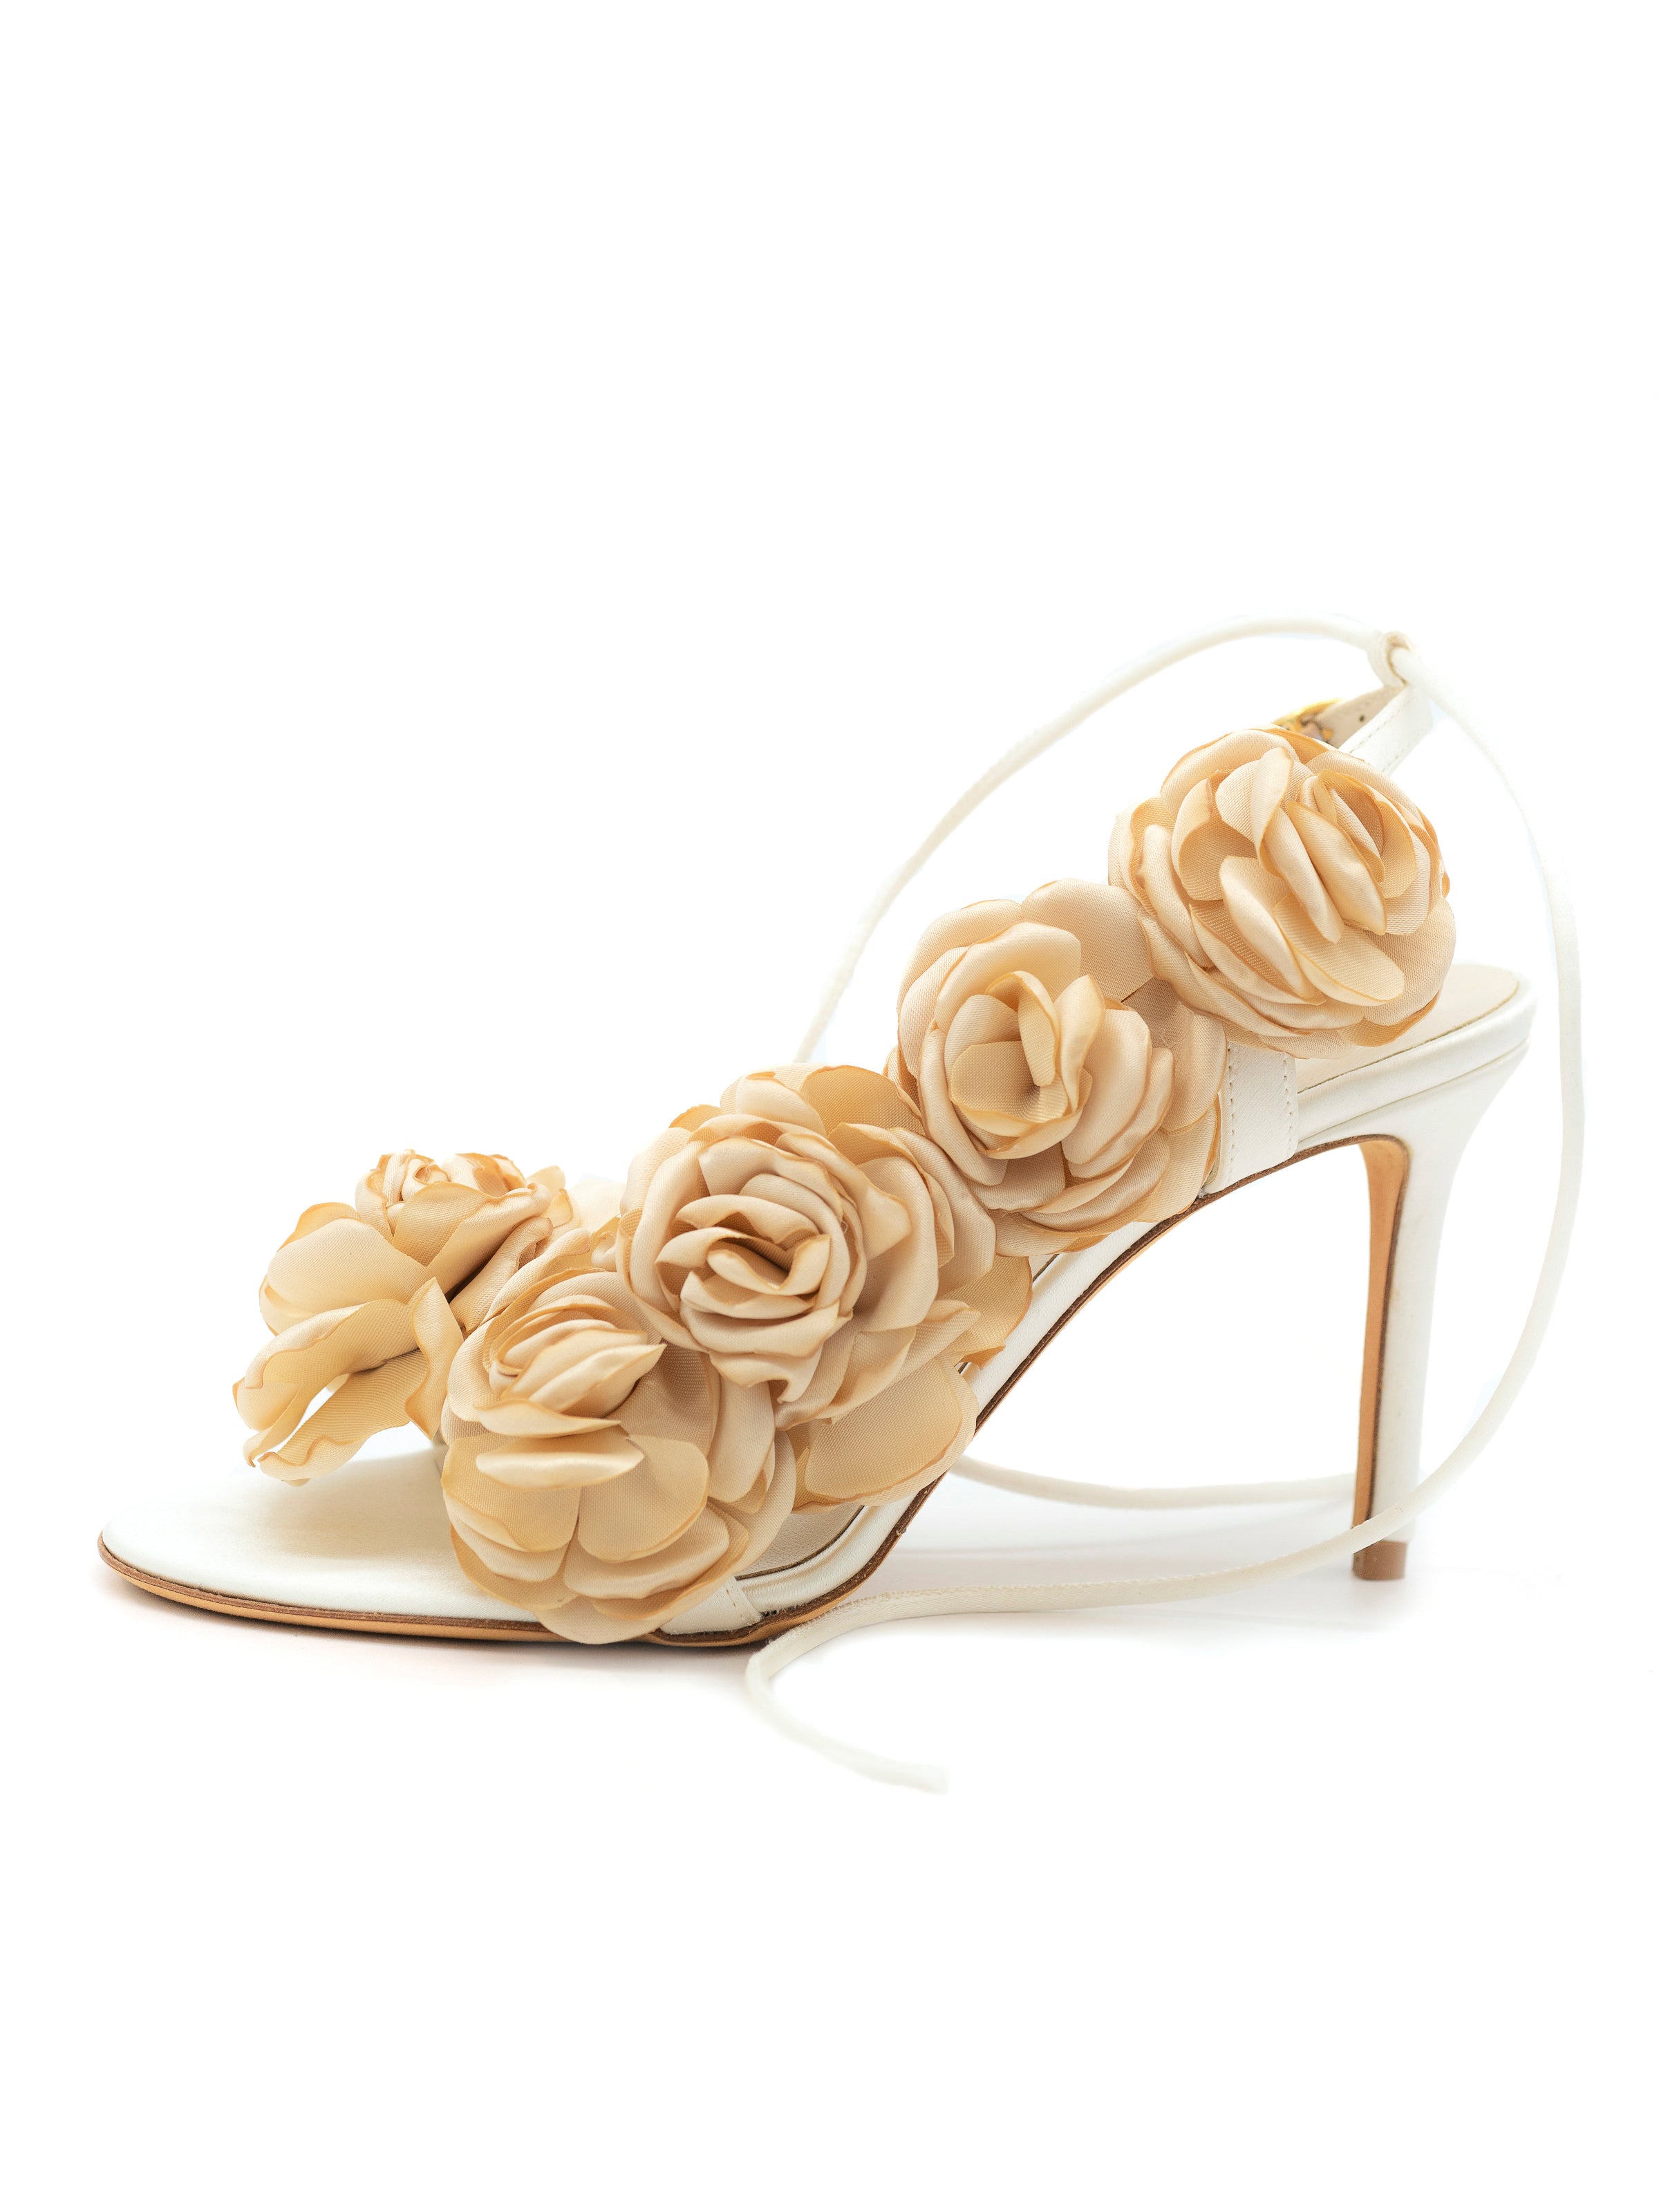 Girl Jelly shoes sandal style with HELLO KITTY design. I105 | OkaaSpain